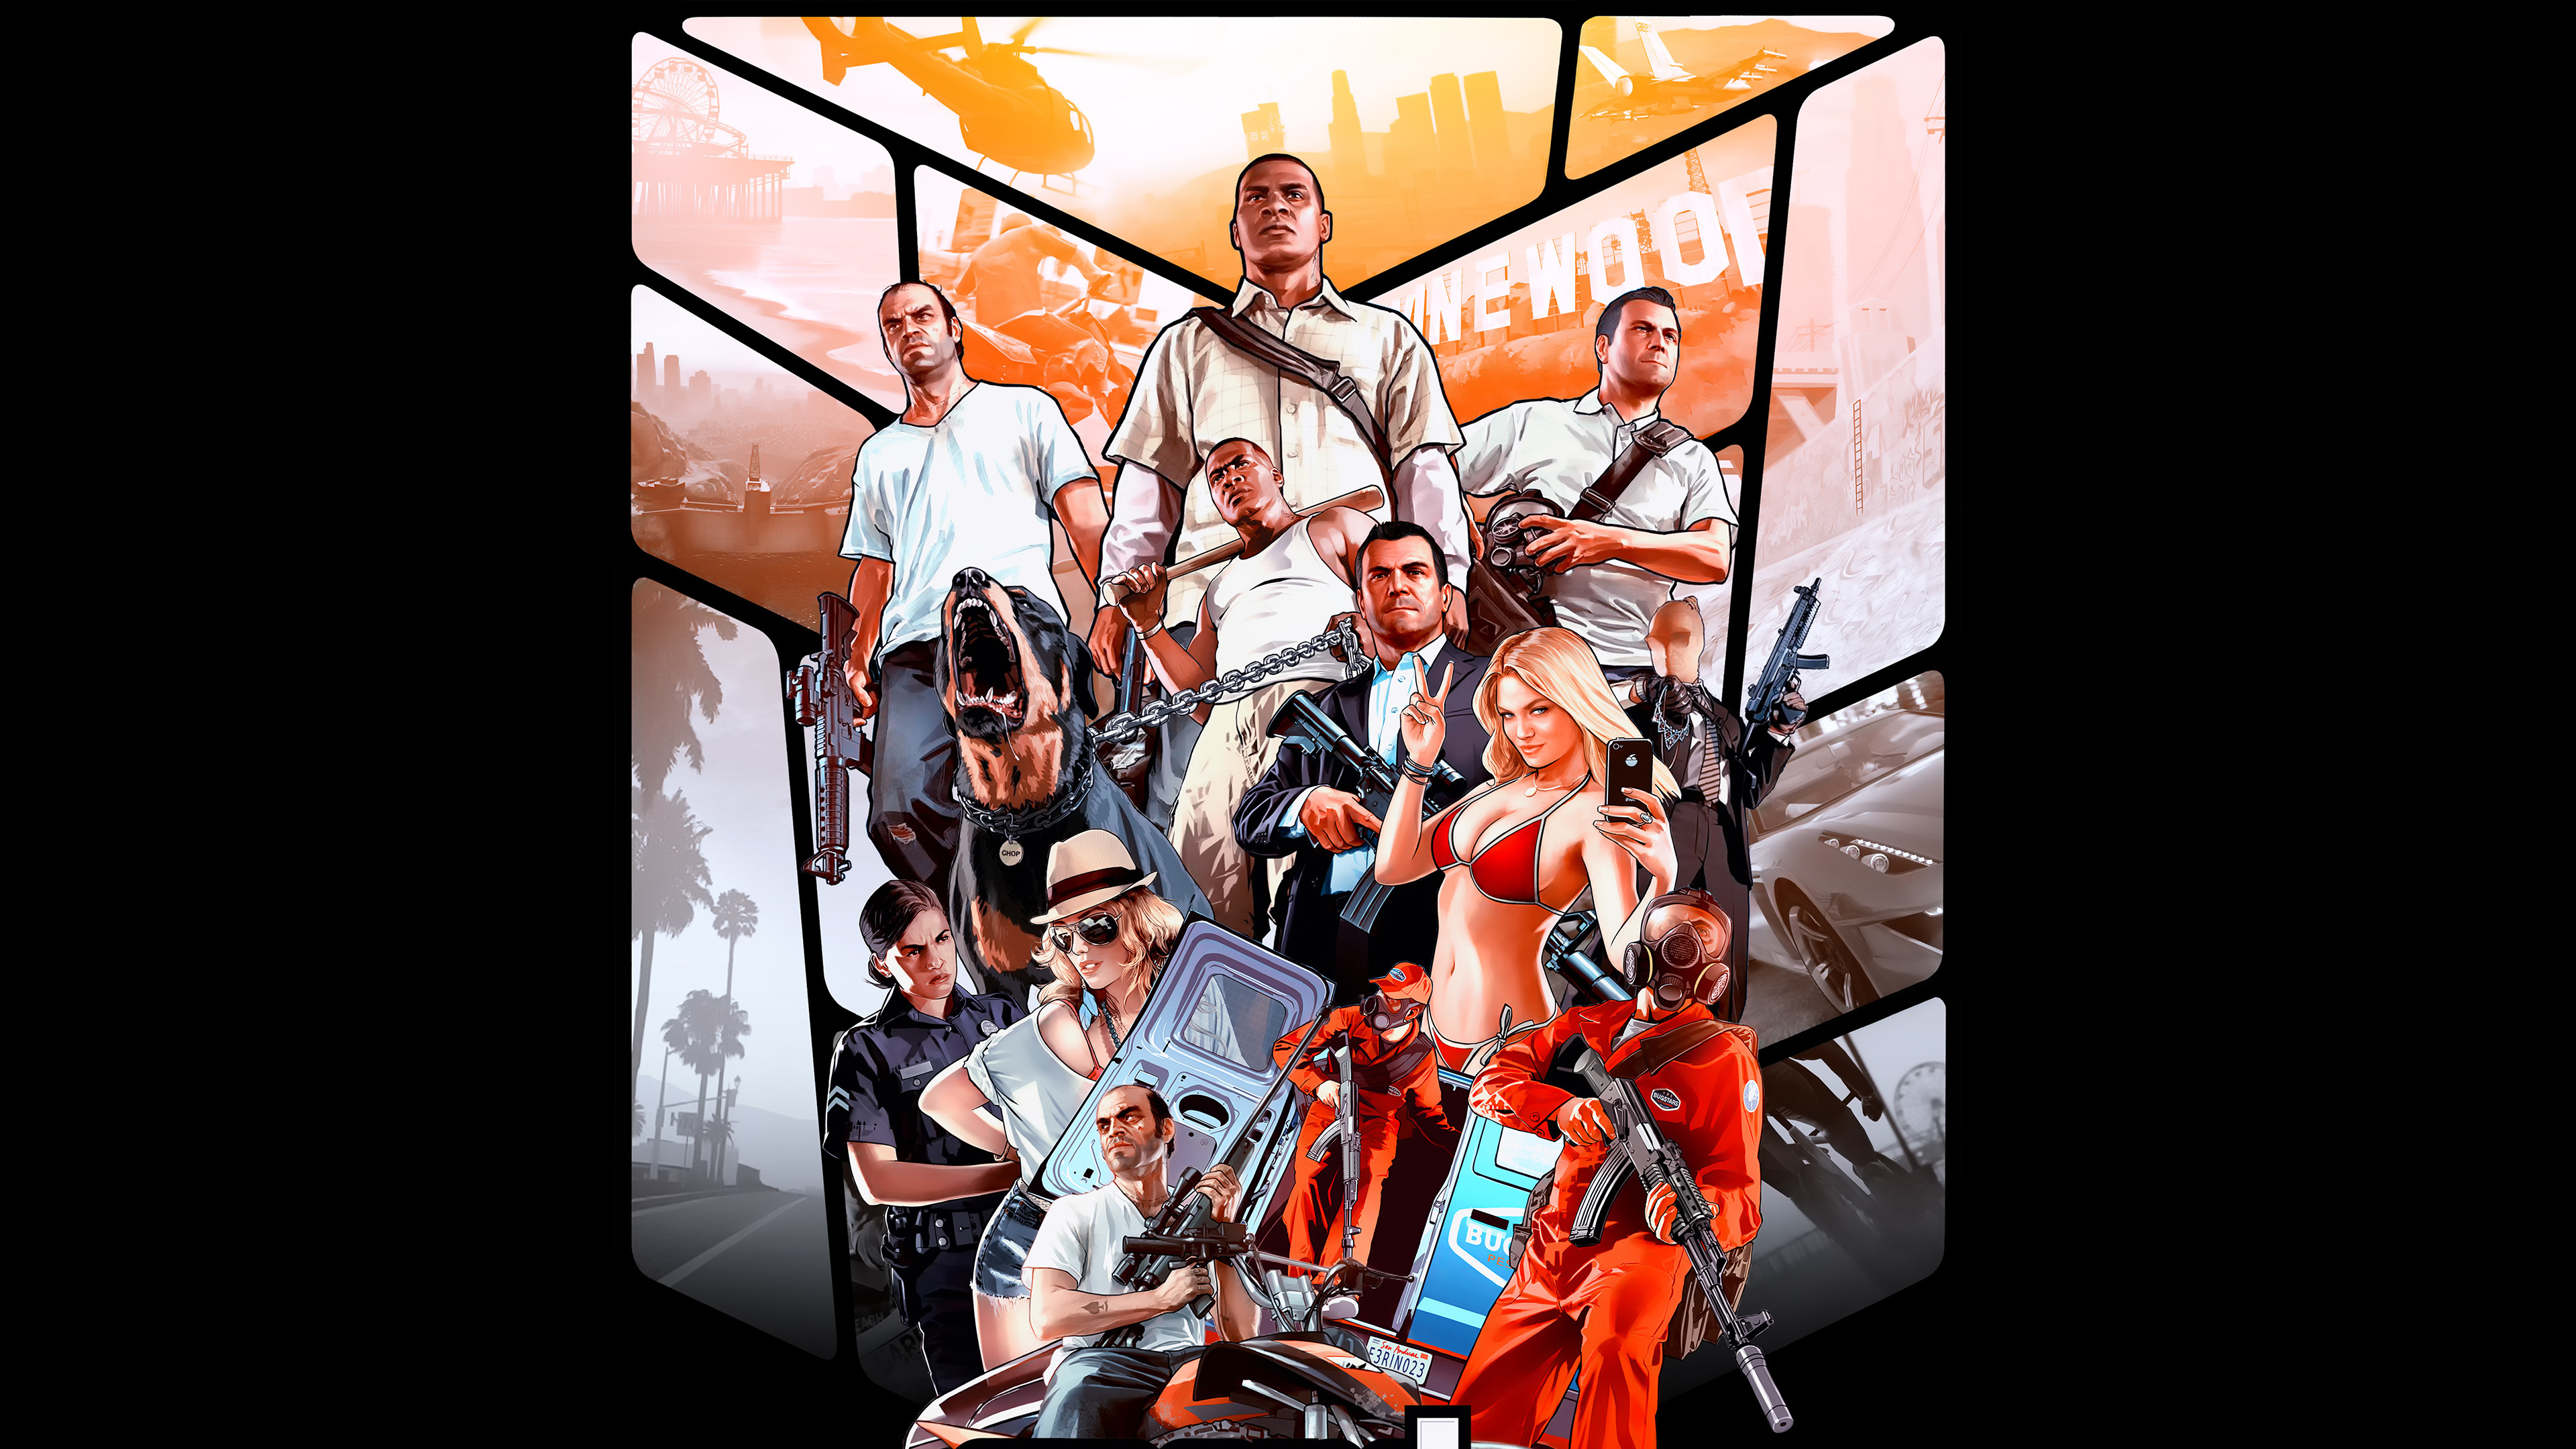 Download 3840x2160 Wallpaper Grand Theft Auto V Poster